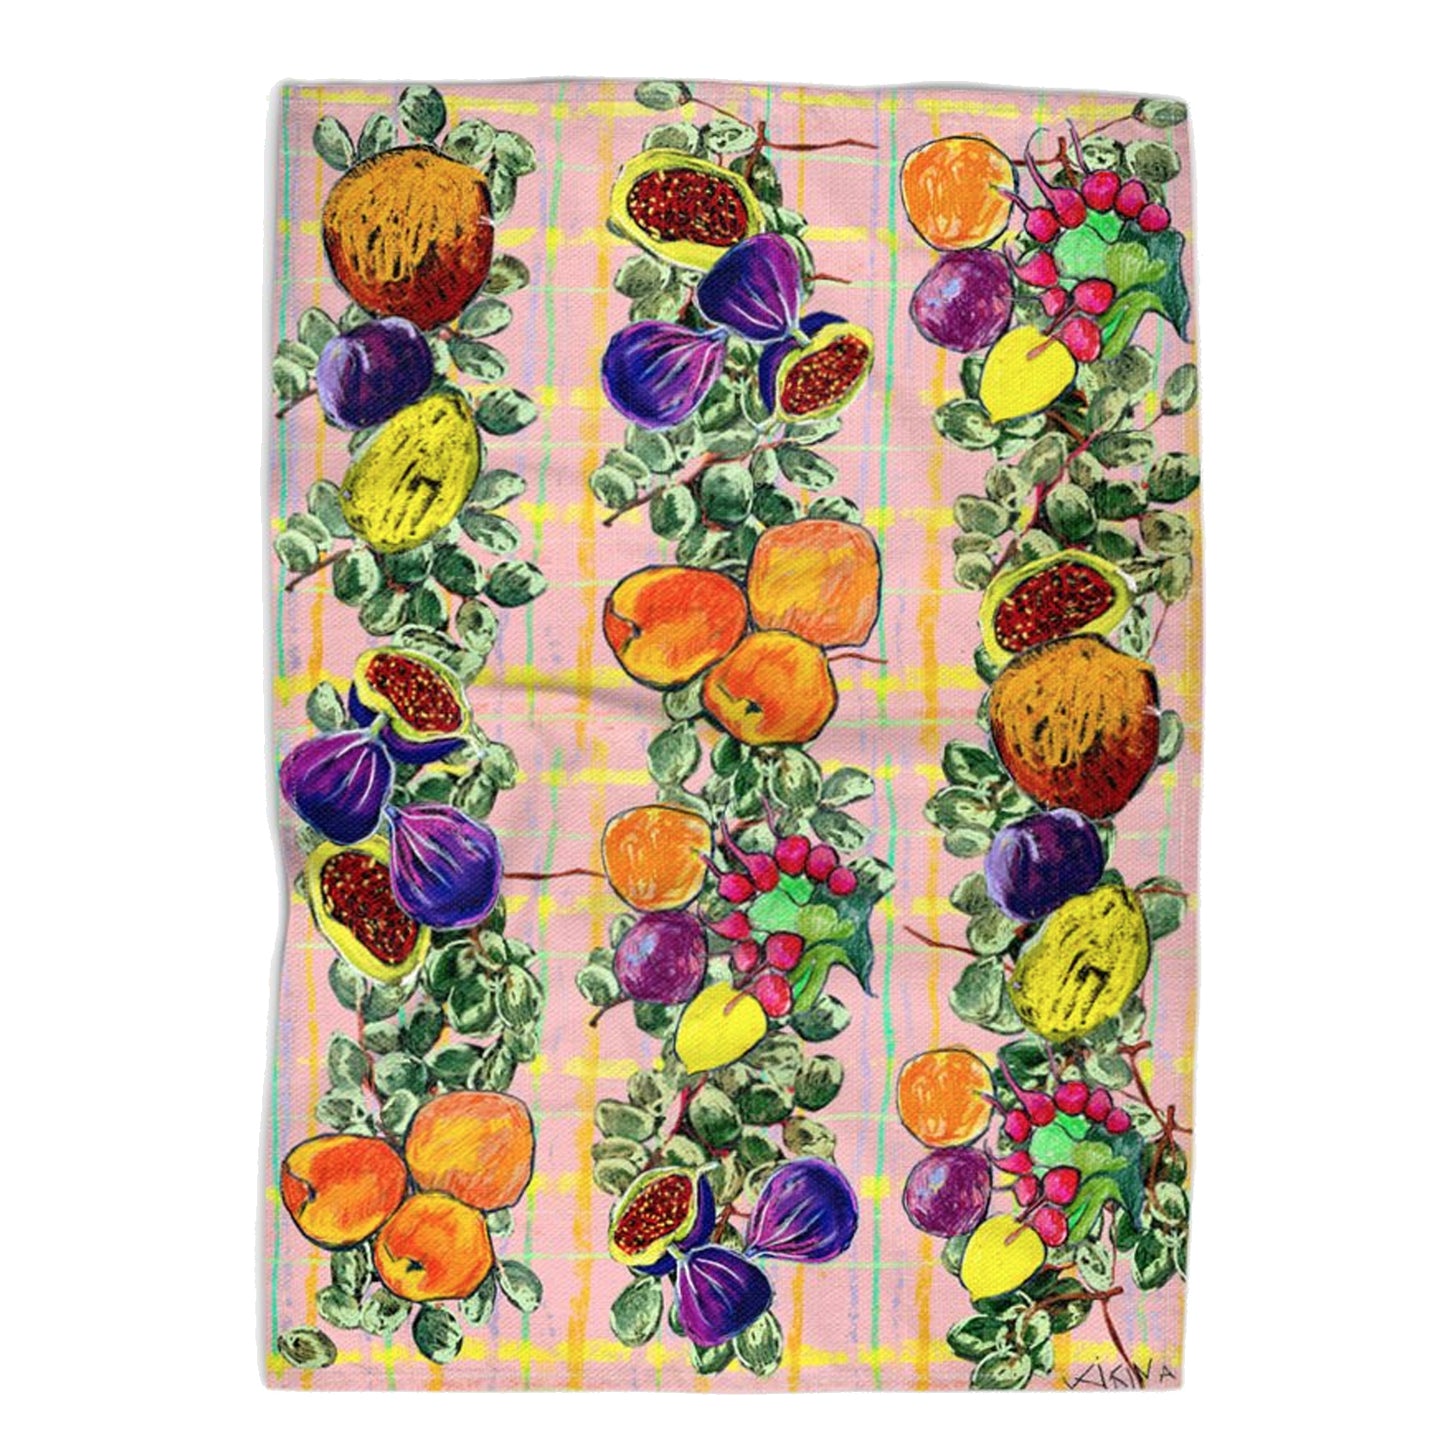 Figs and Peaches. Premium Linen Tea Towel